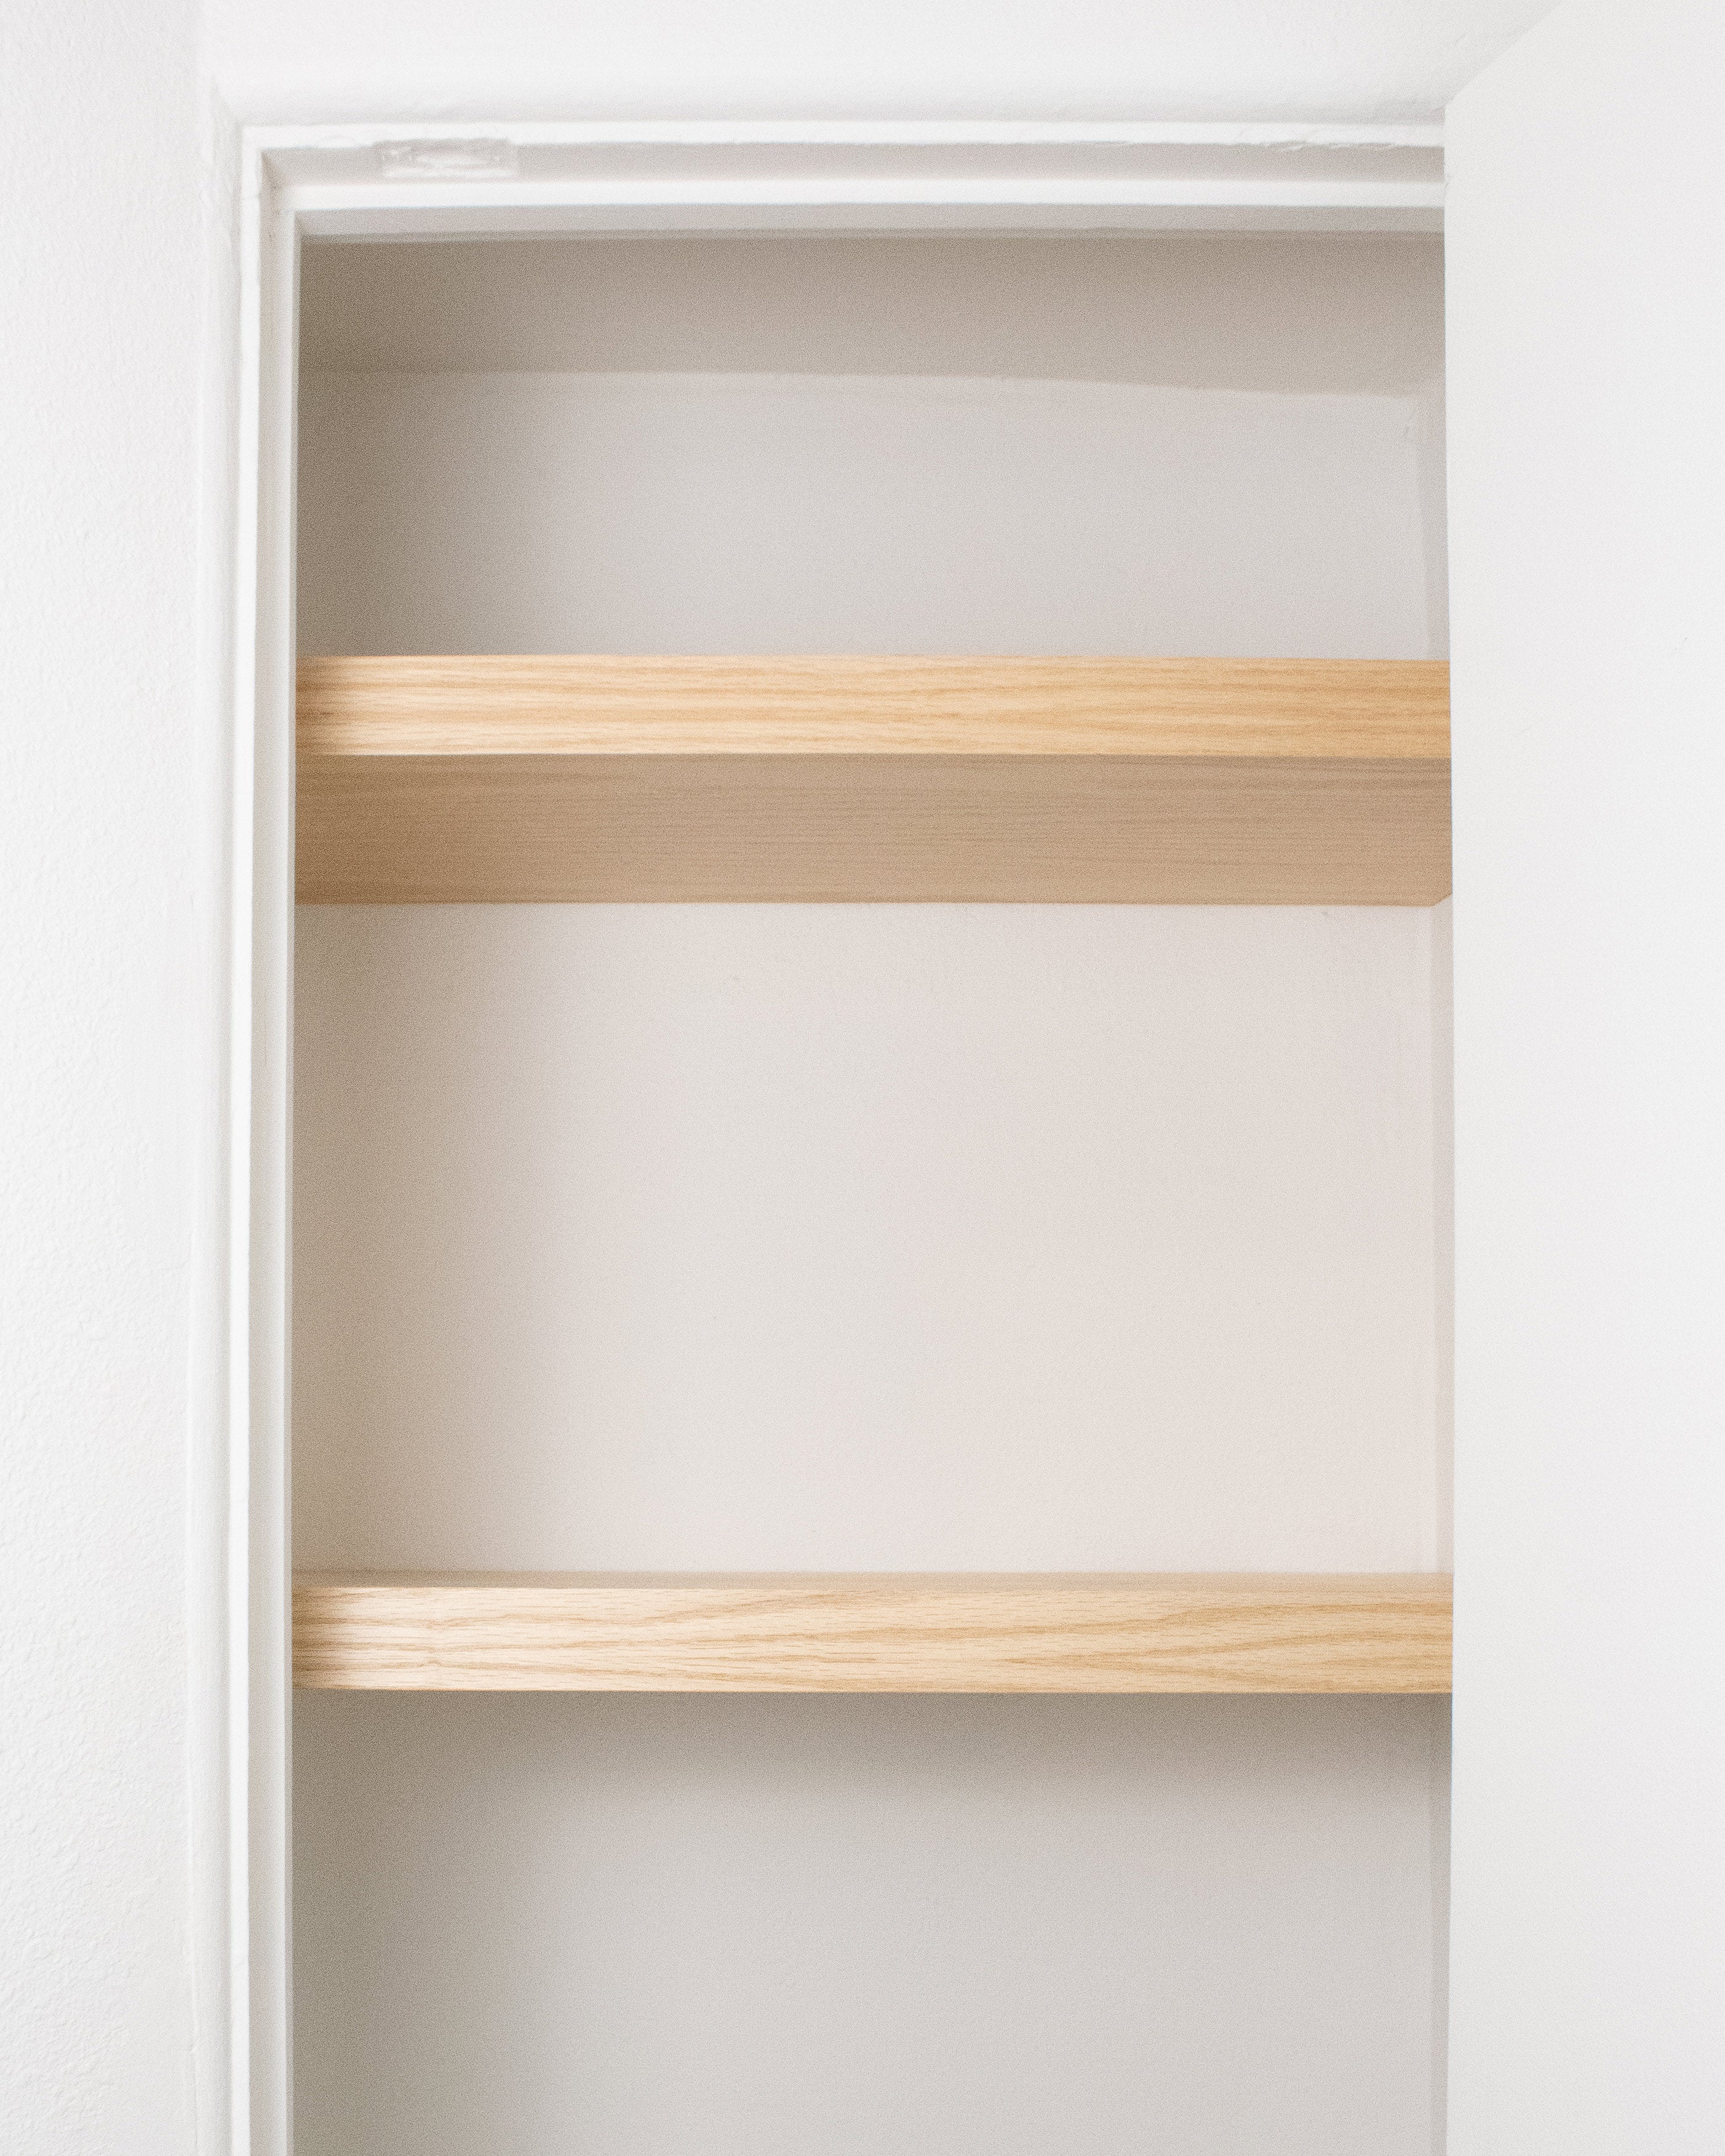 Red Oak 2-4" thick Cabinet Top / Slab Shelf